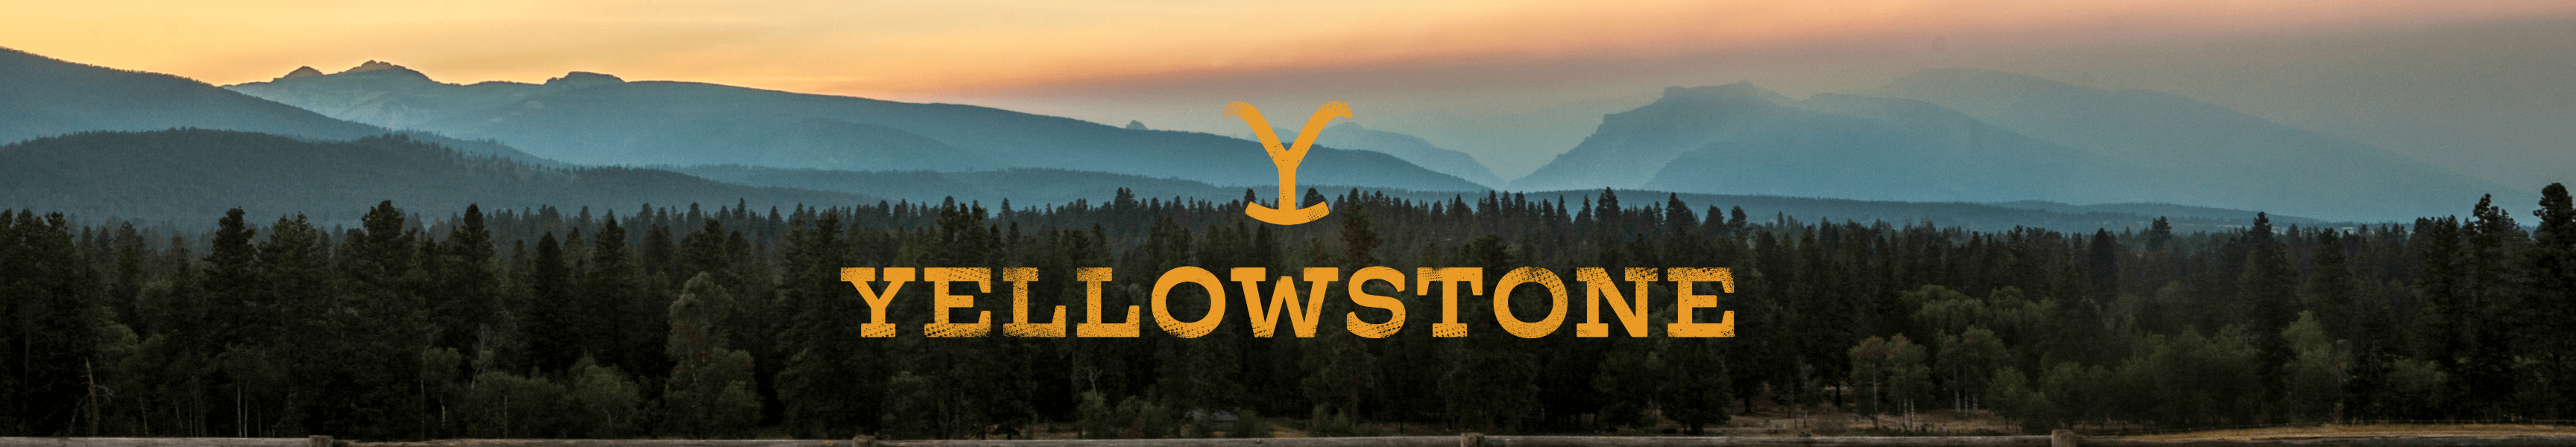 Ornements de Yellowstone